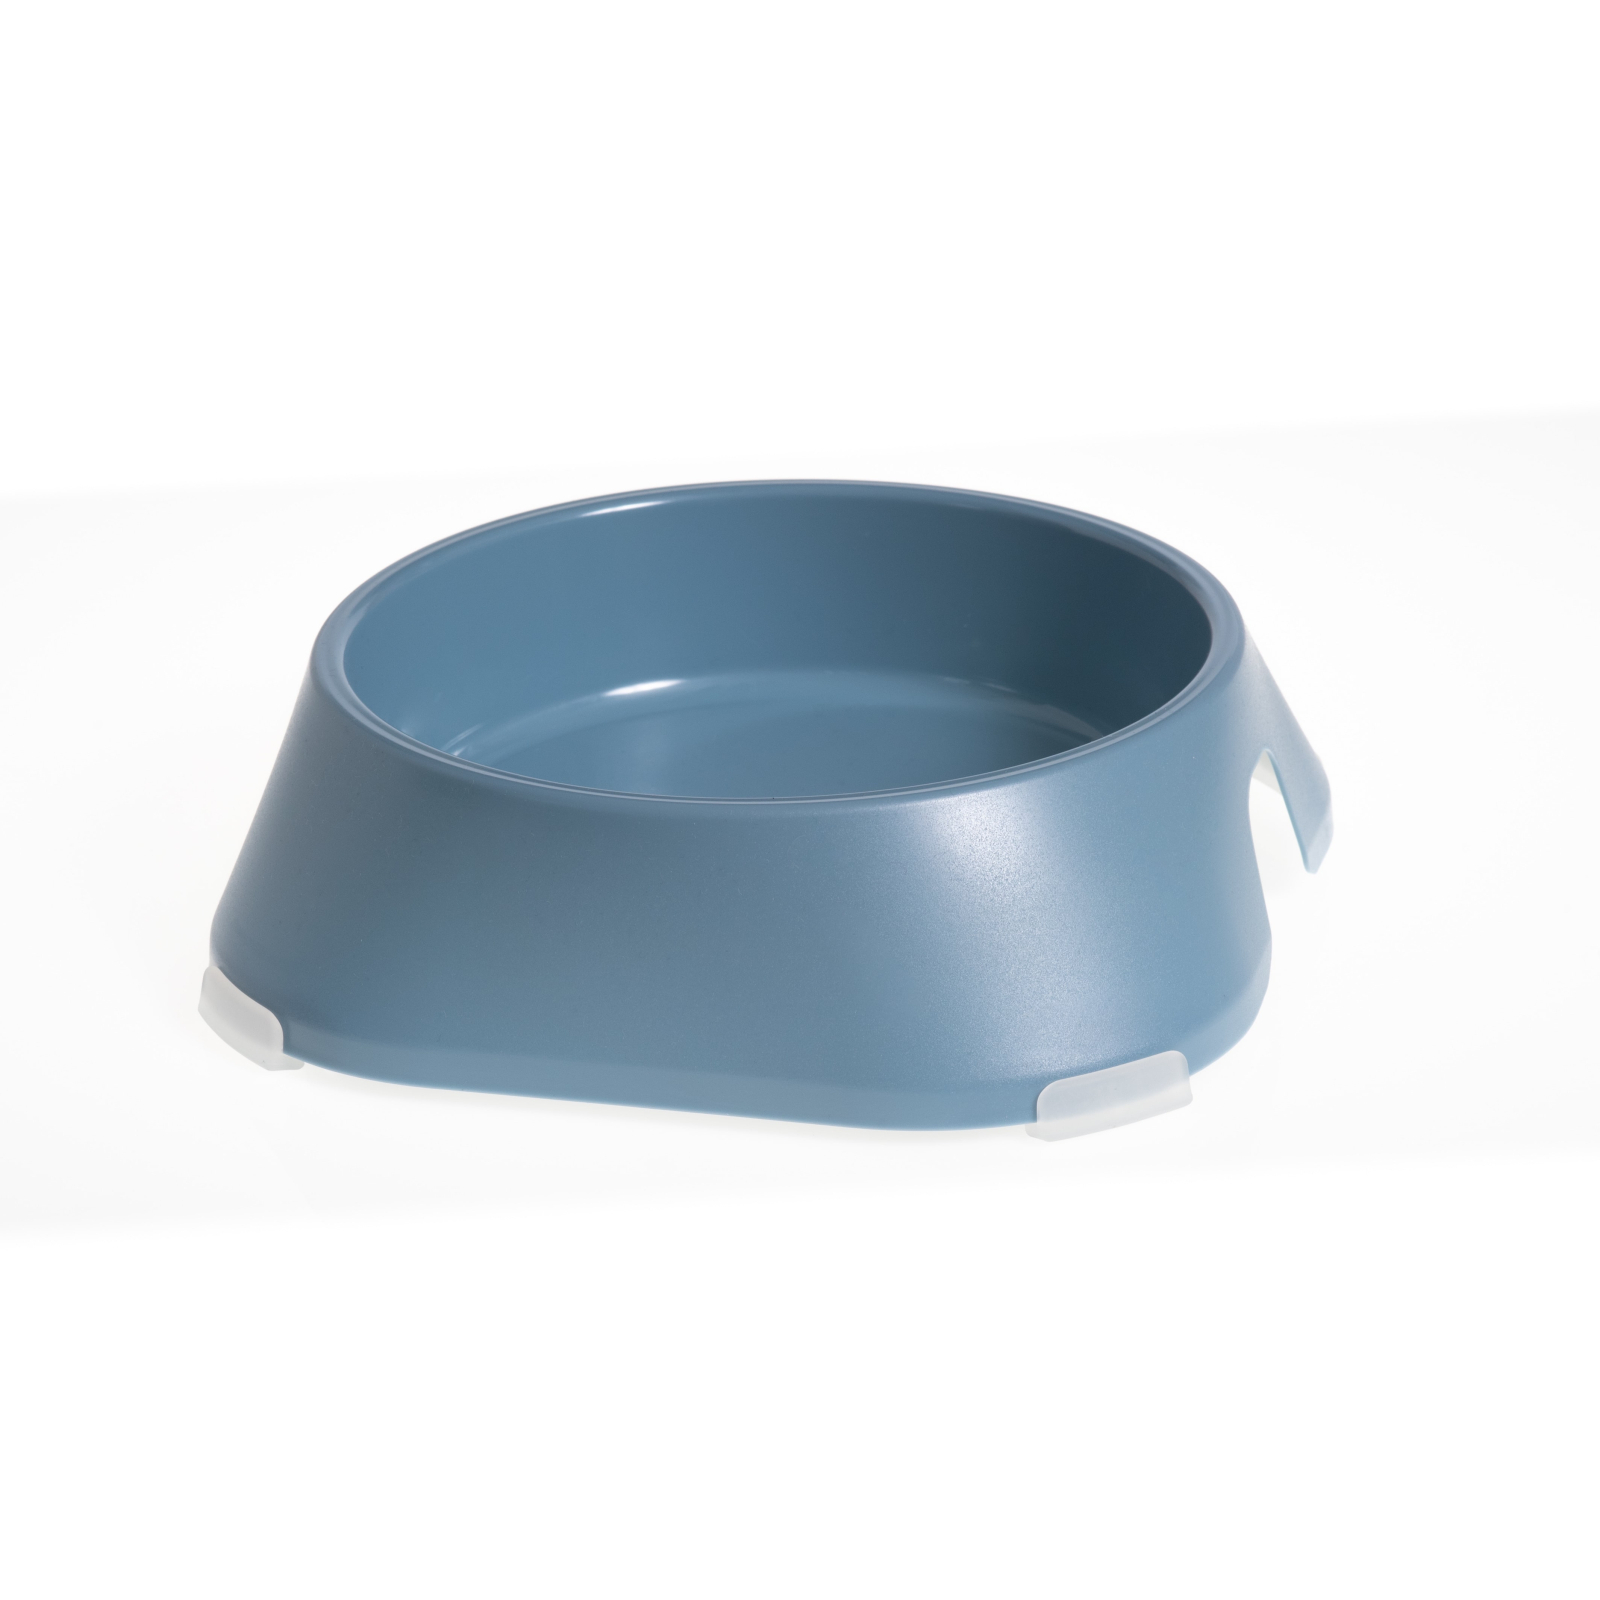 Посуда для собак Fiboo Миска с антискользящими накладками M синяя (FIB0106)